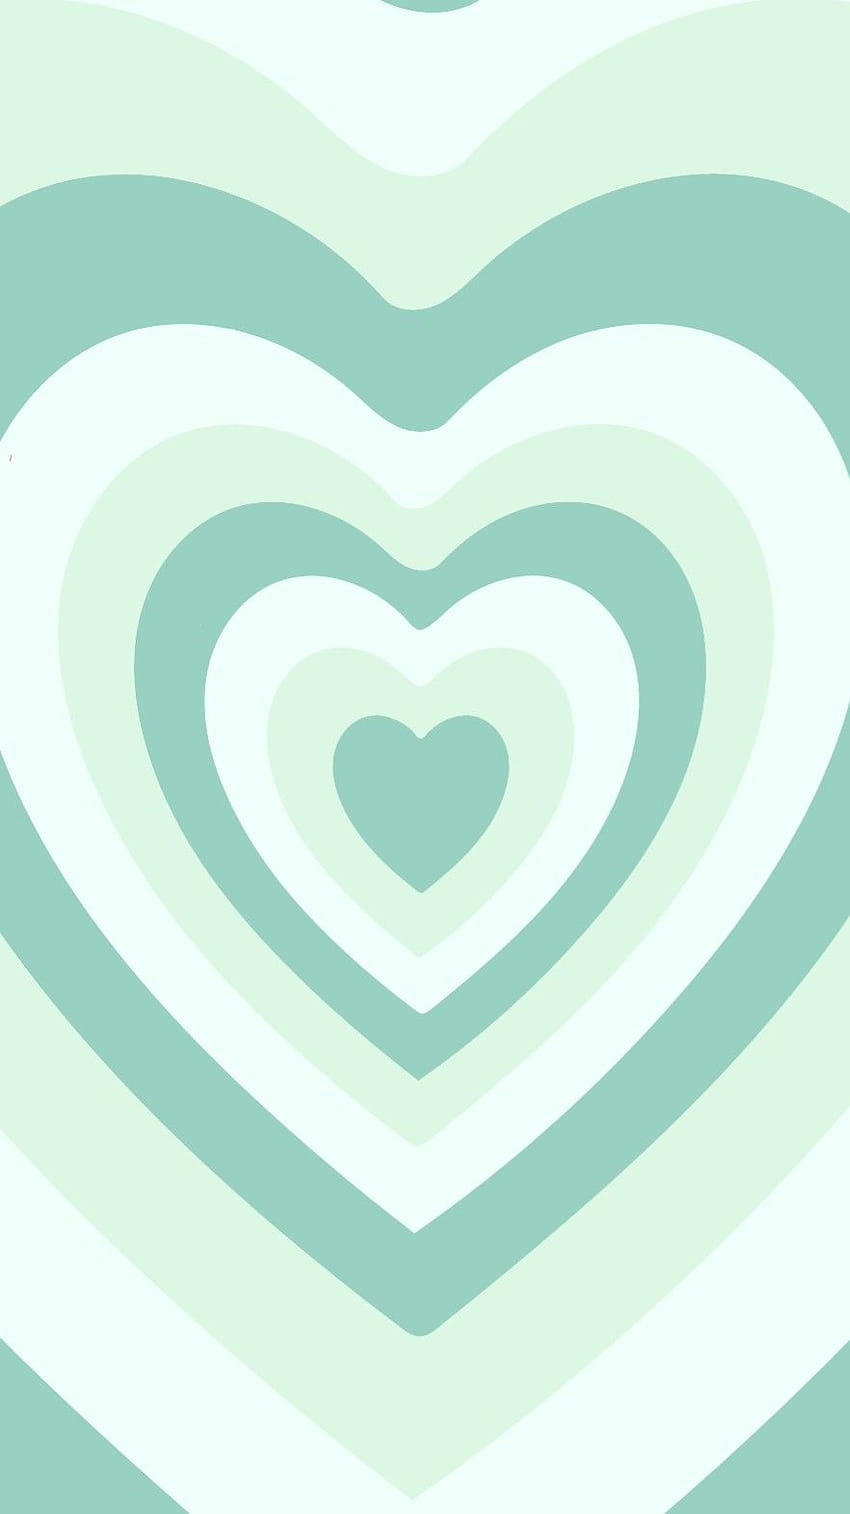 Heart aesthetic wallpaper by Zyokaze  Download on ZEDGE  f880